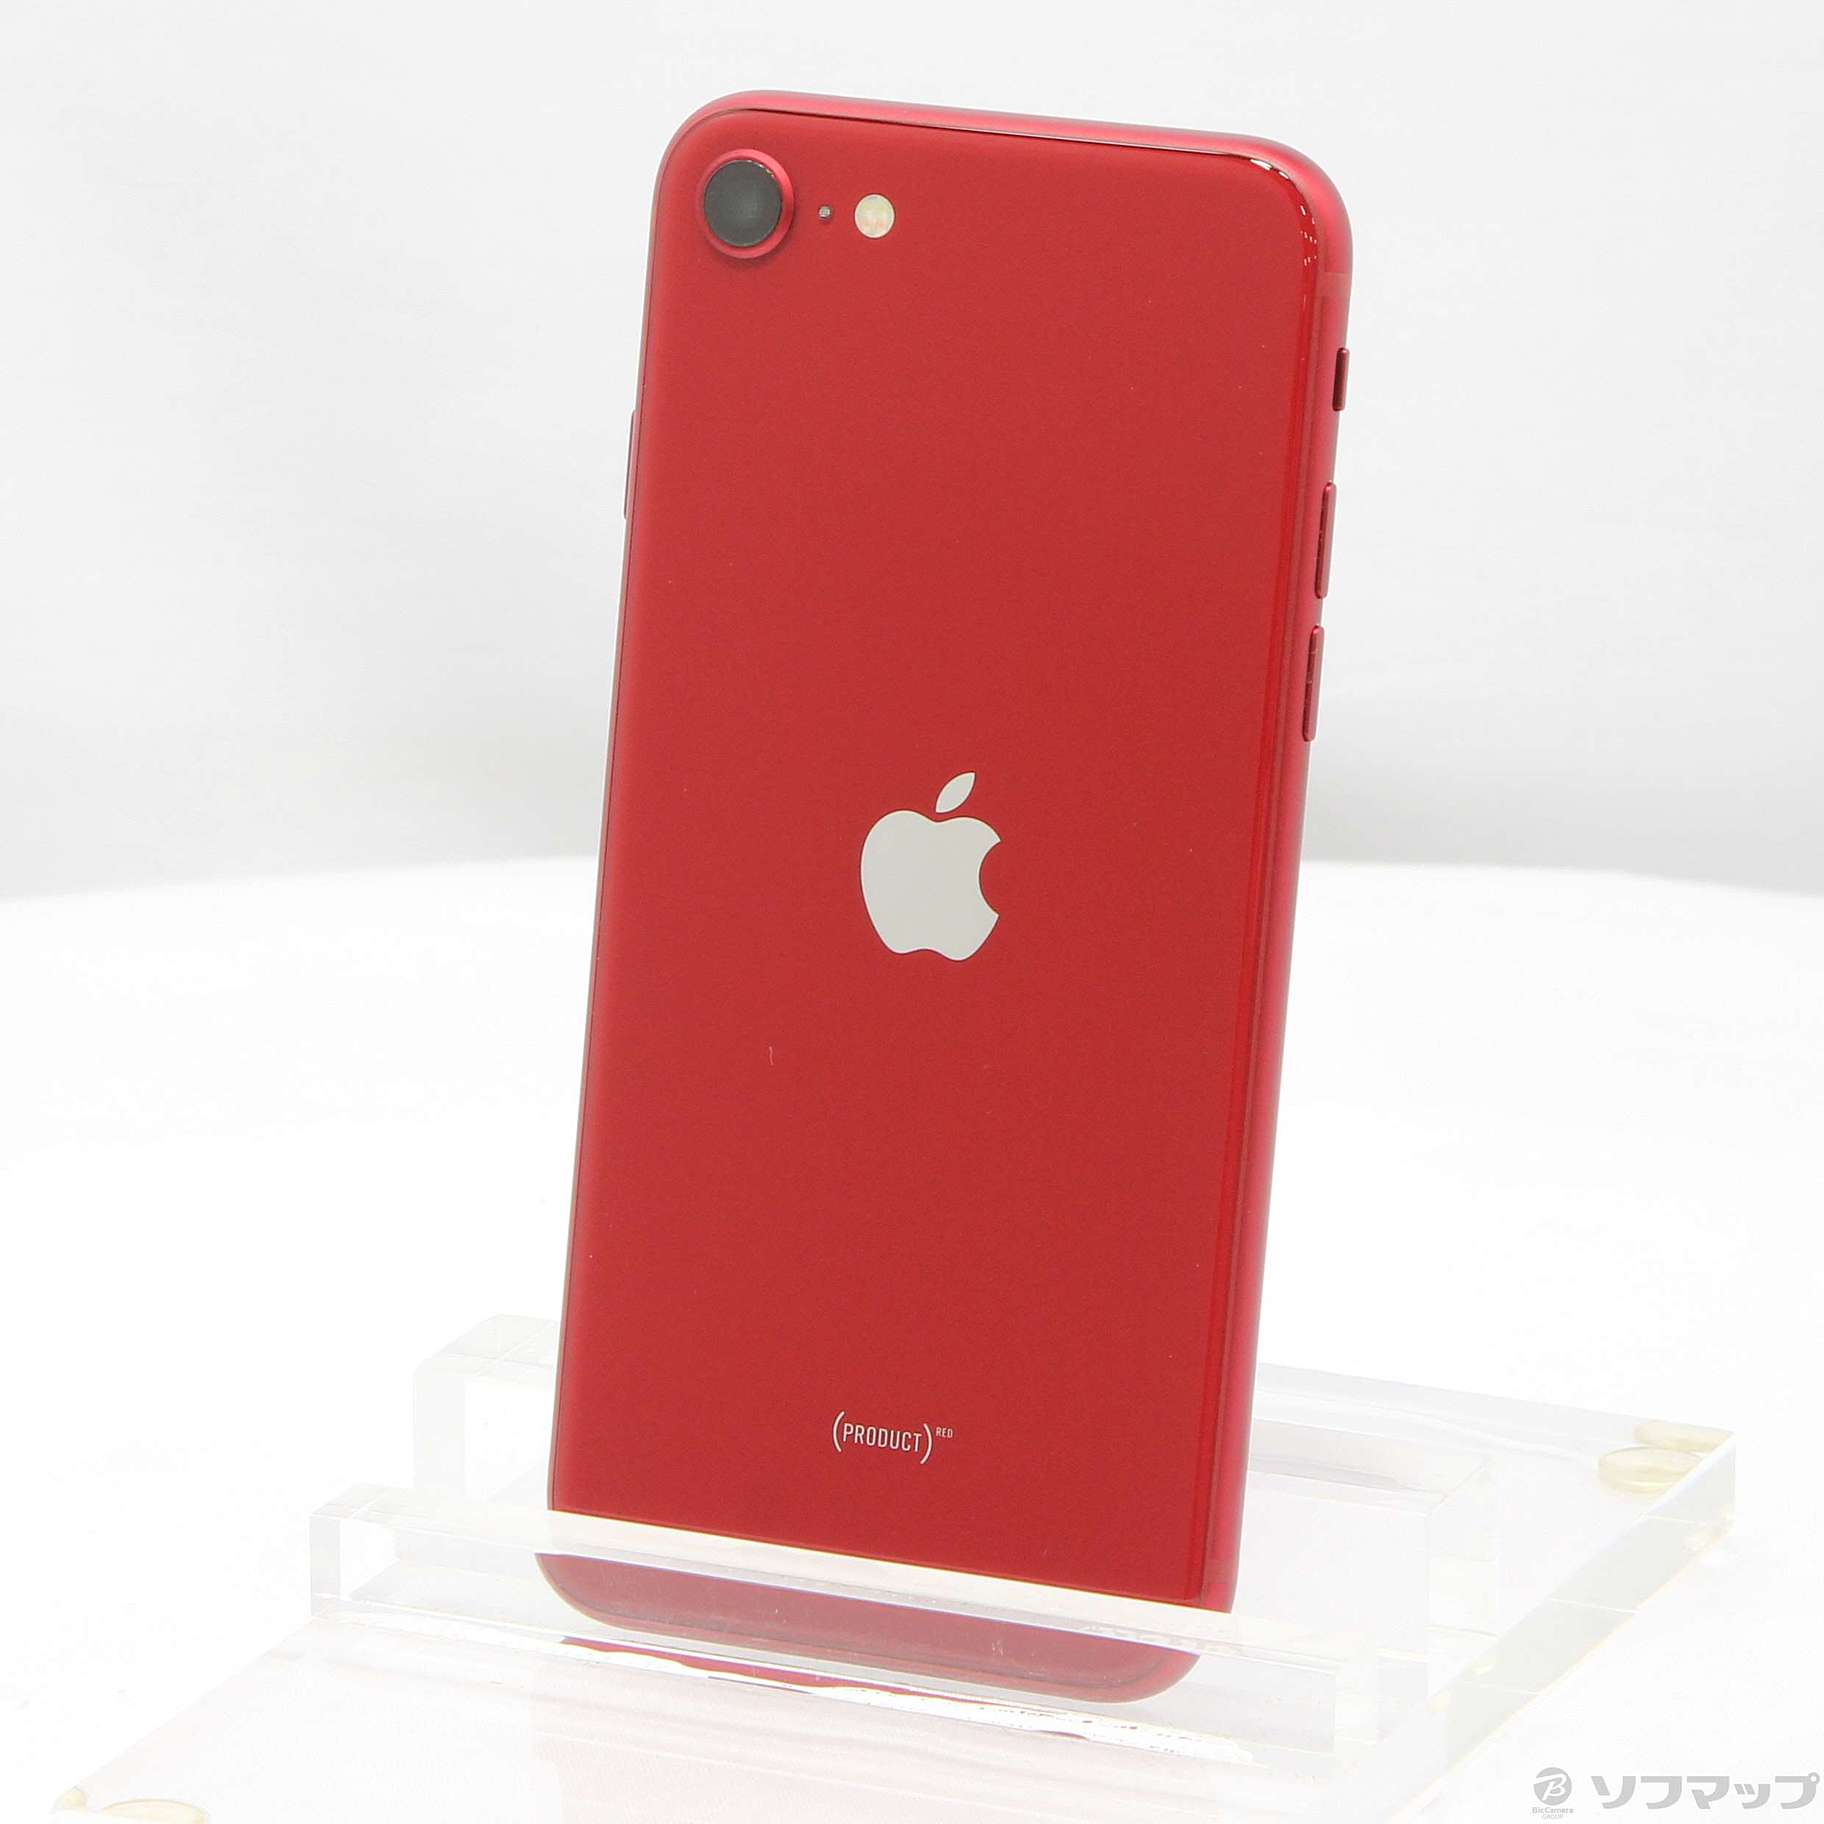 iPhone SE (第3世代) 64GB SIMフリー 中古(白ロム)価格比較 - 価格.com